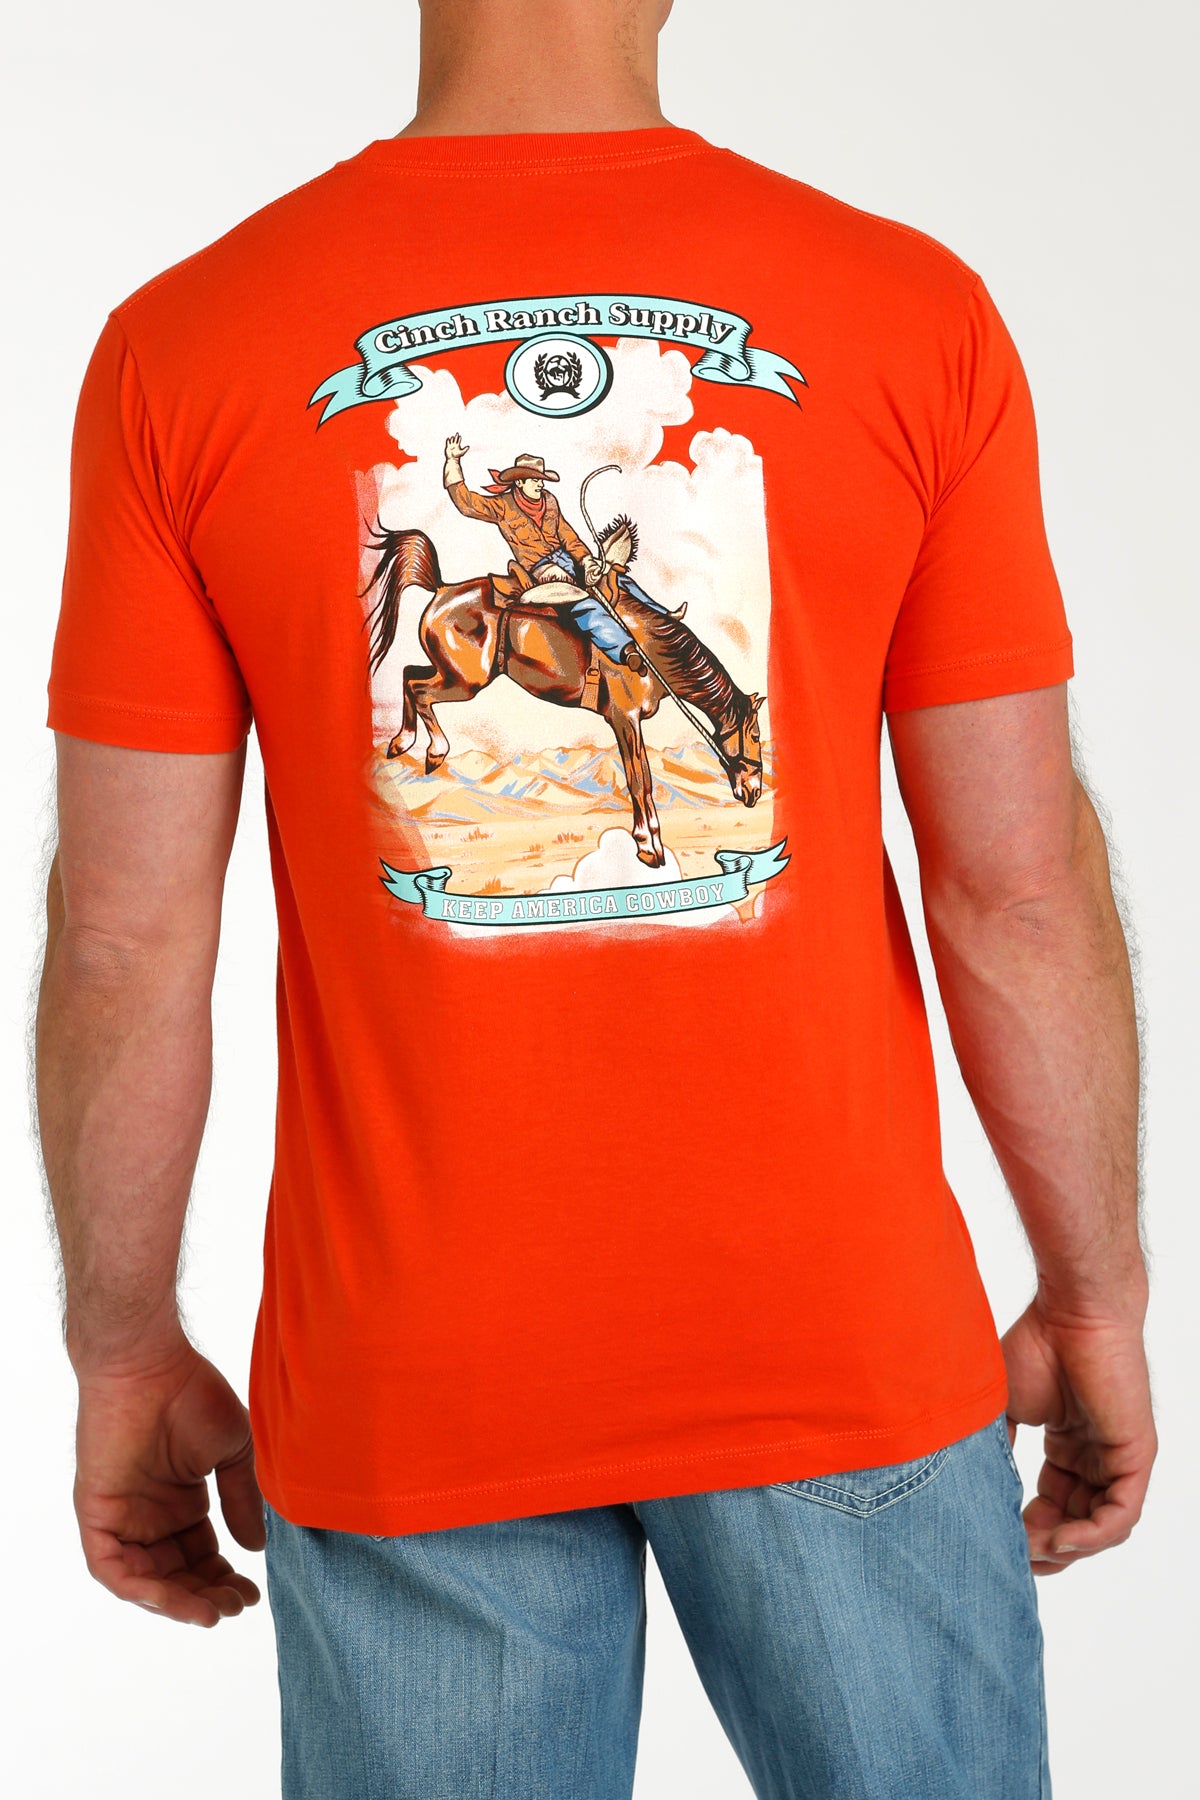 Cinch Men's "Cinch Ranch Supply, Keep America Cowboy" T-shirt